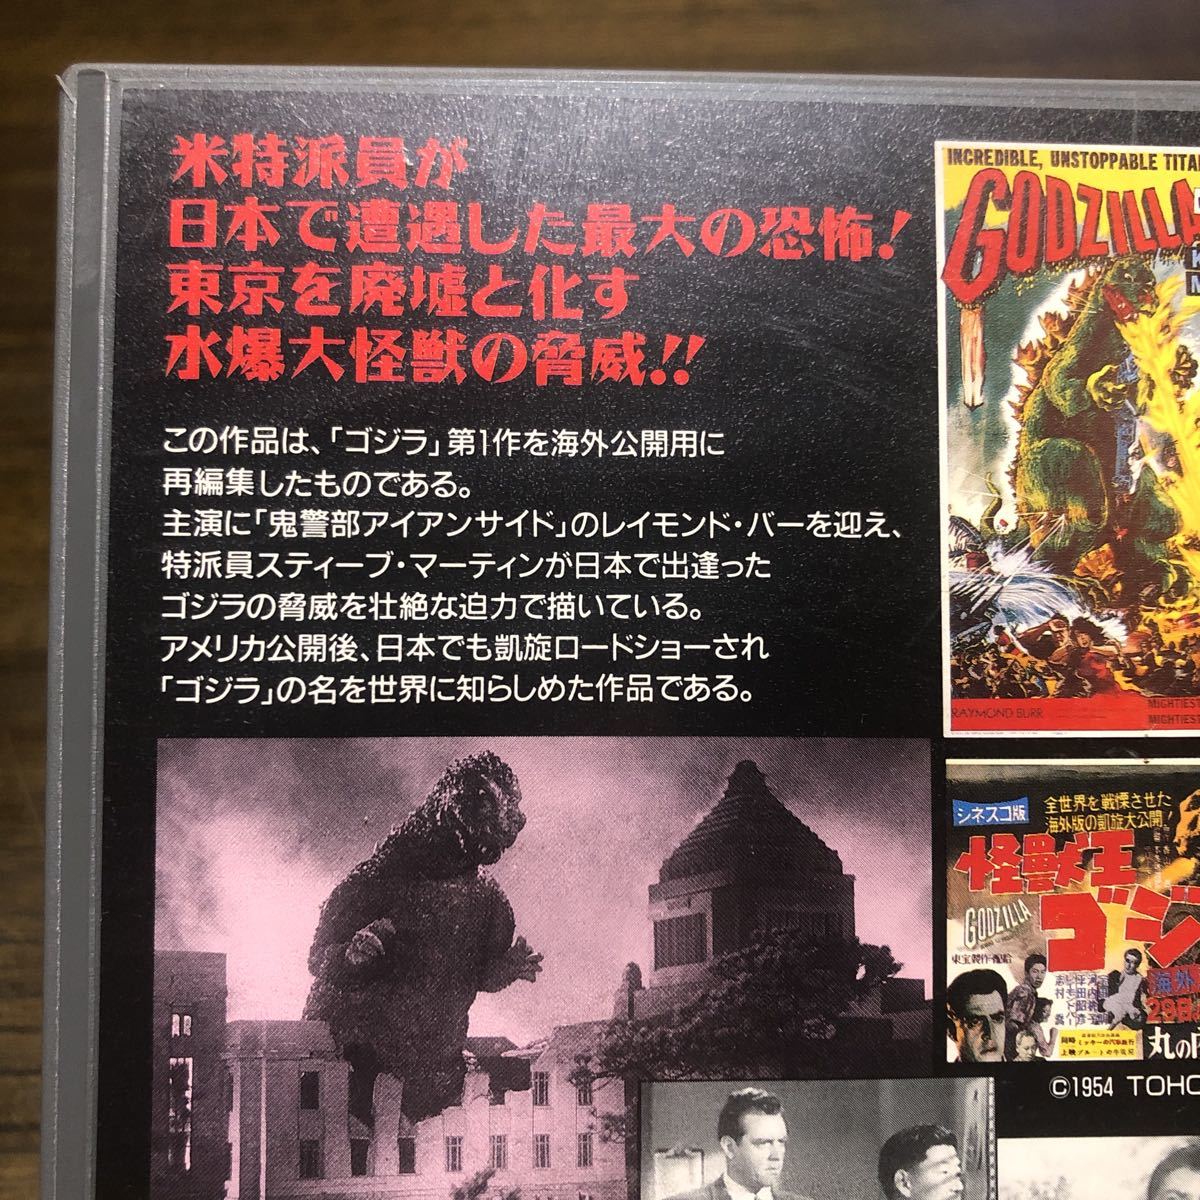 VHS GODZILLA monster . Godzilla overseas edition 1954 year . rice field Akira Kawauchi Momoko Raymond * bar flat rice field ..... Murakami winter . jpy . britain ni videotape 